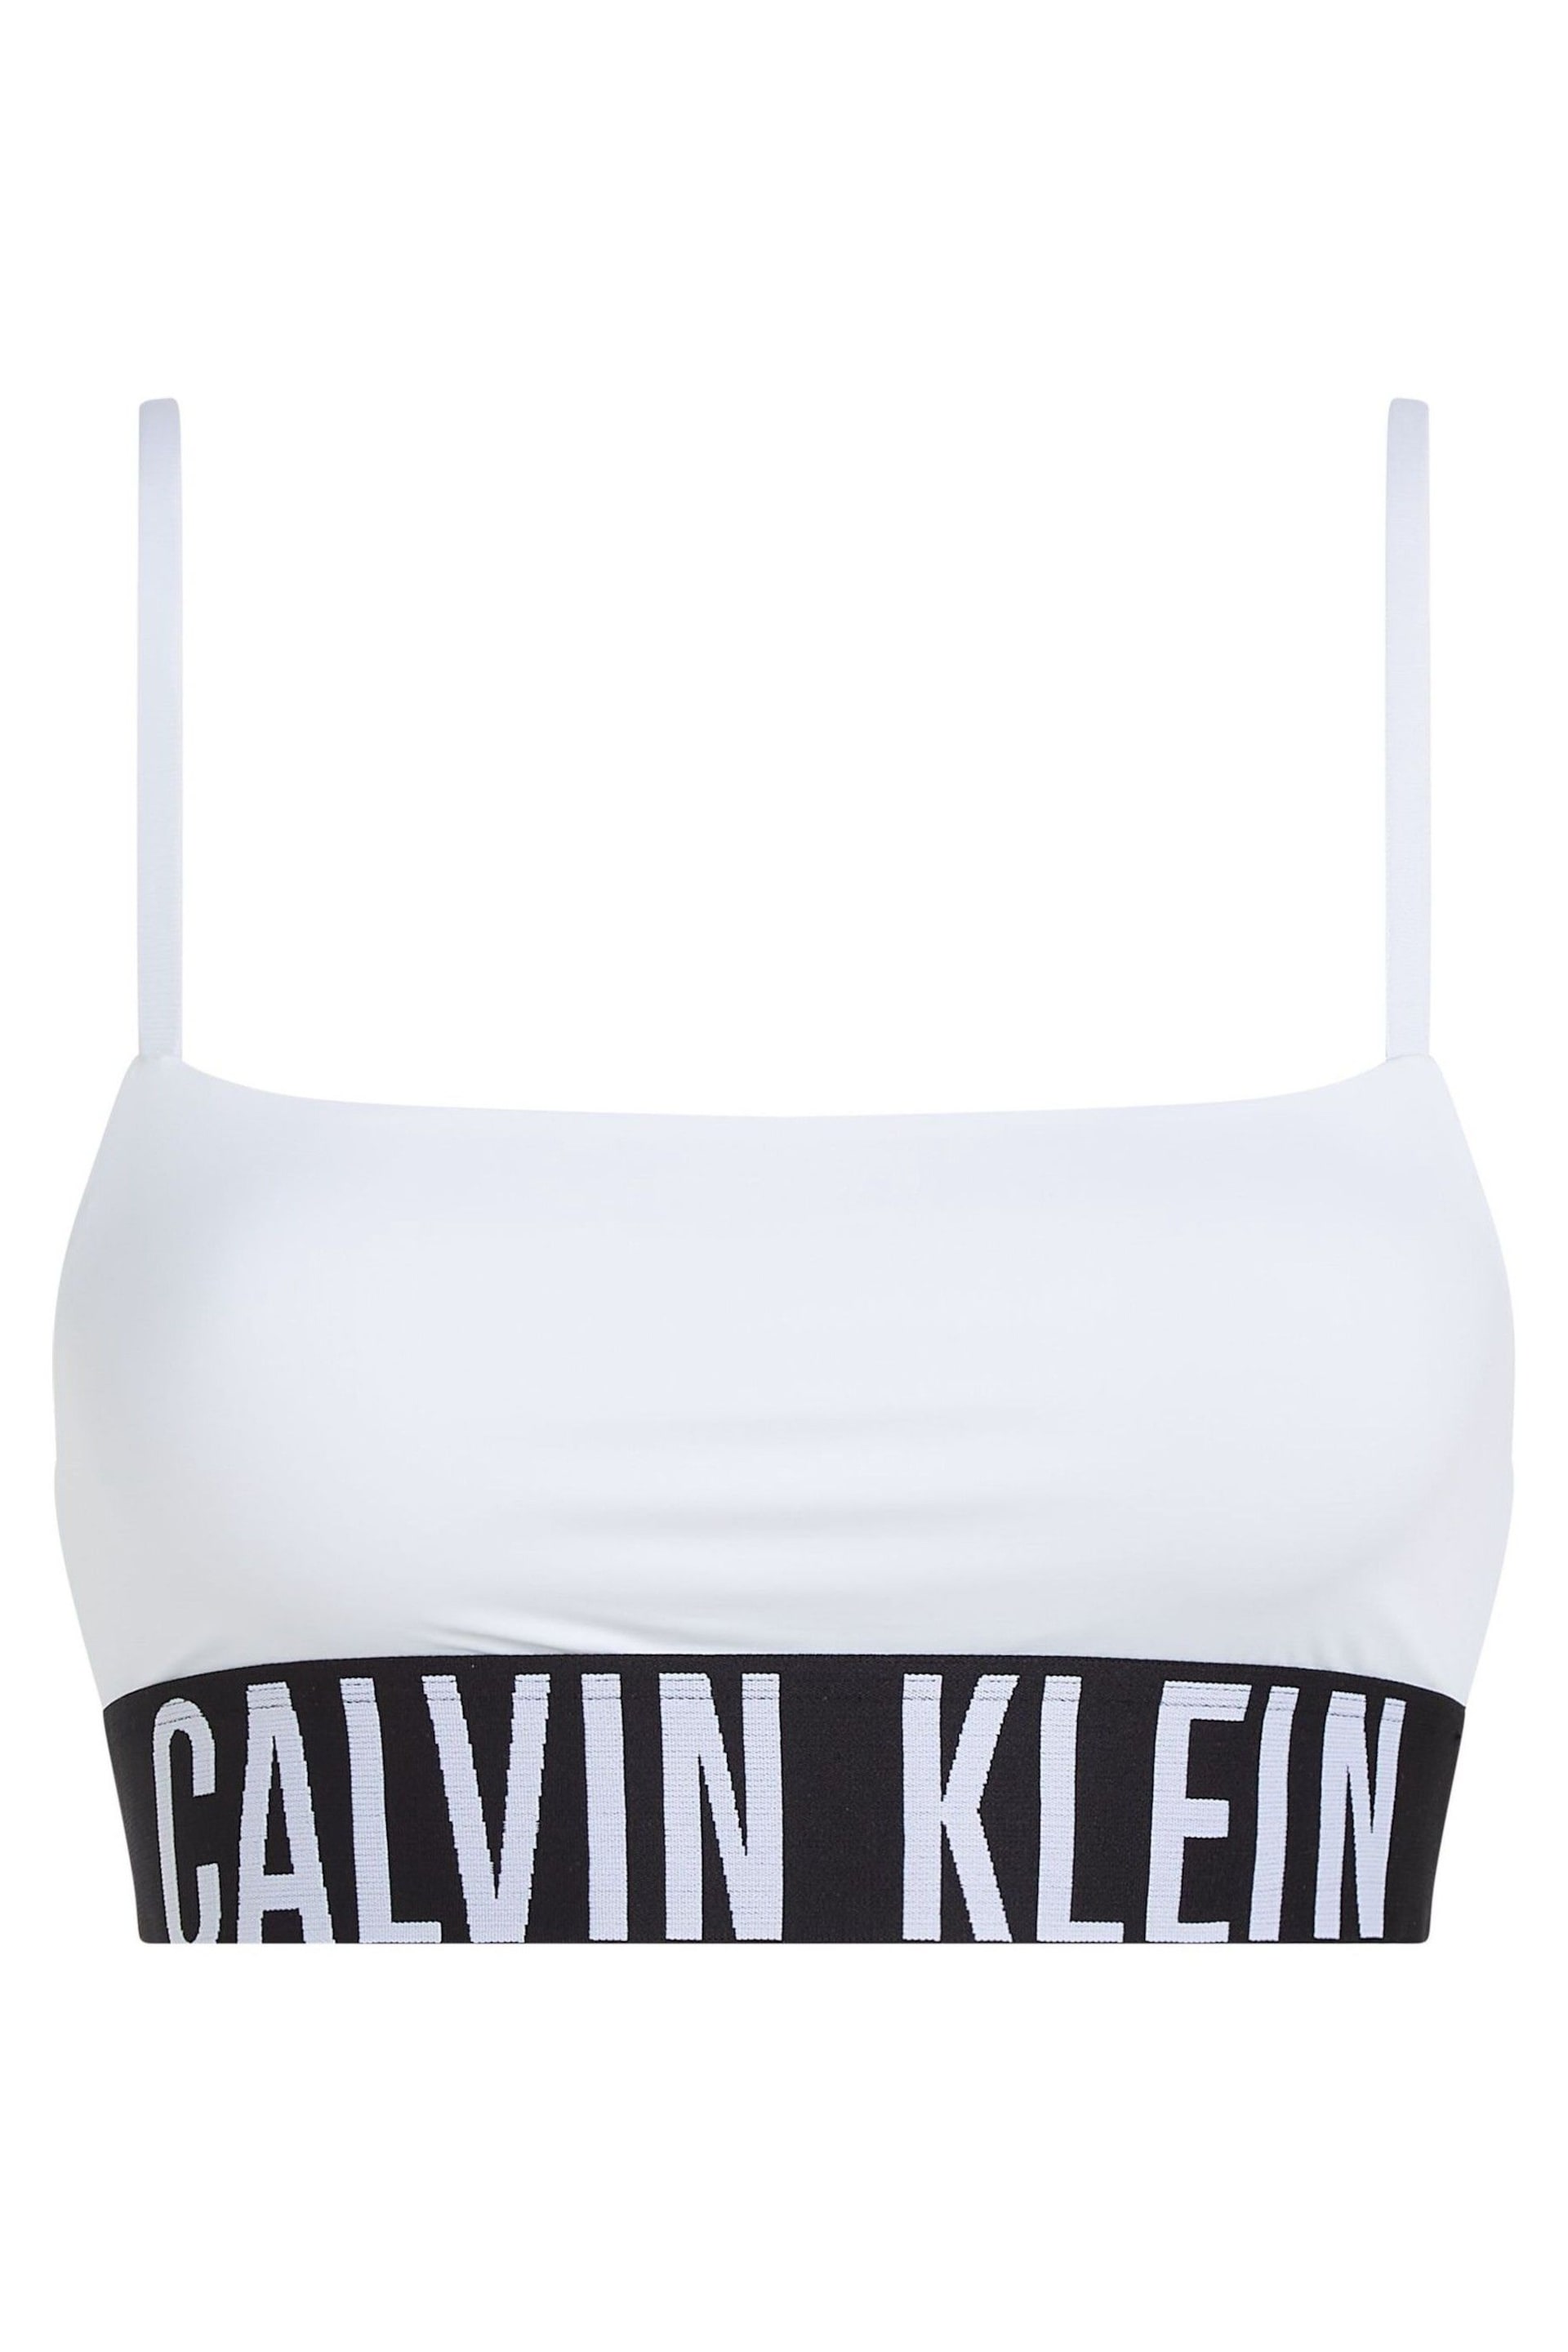 Calvin Klein White Slogan Bralette - Image 3 of 5